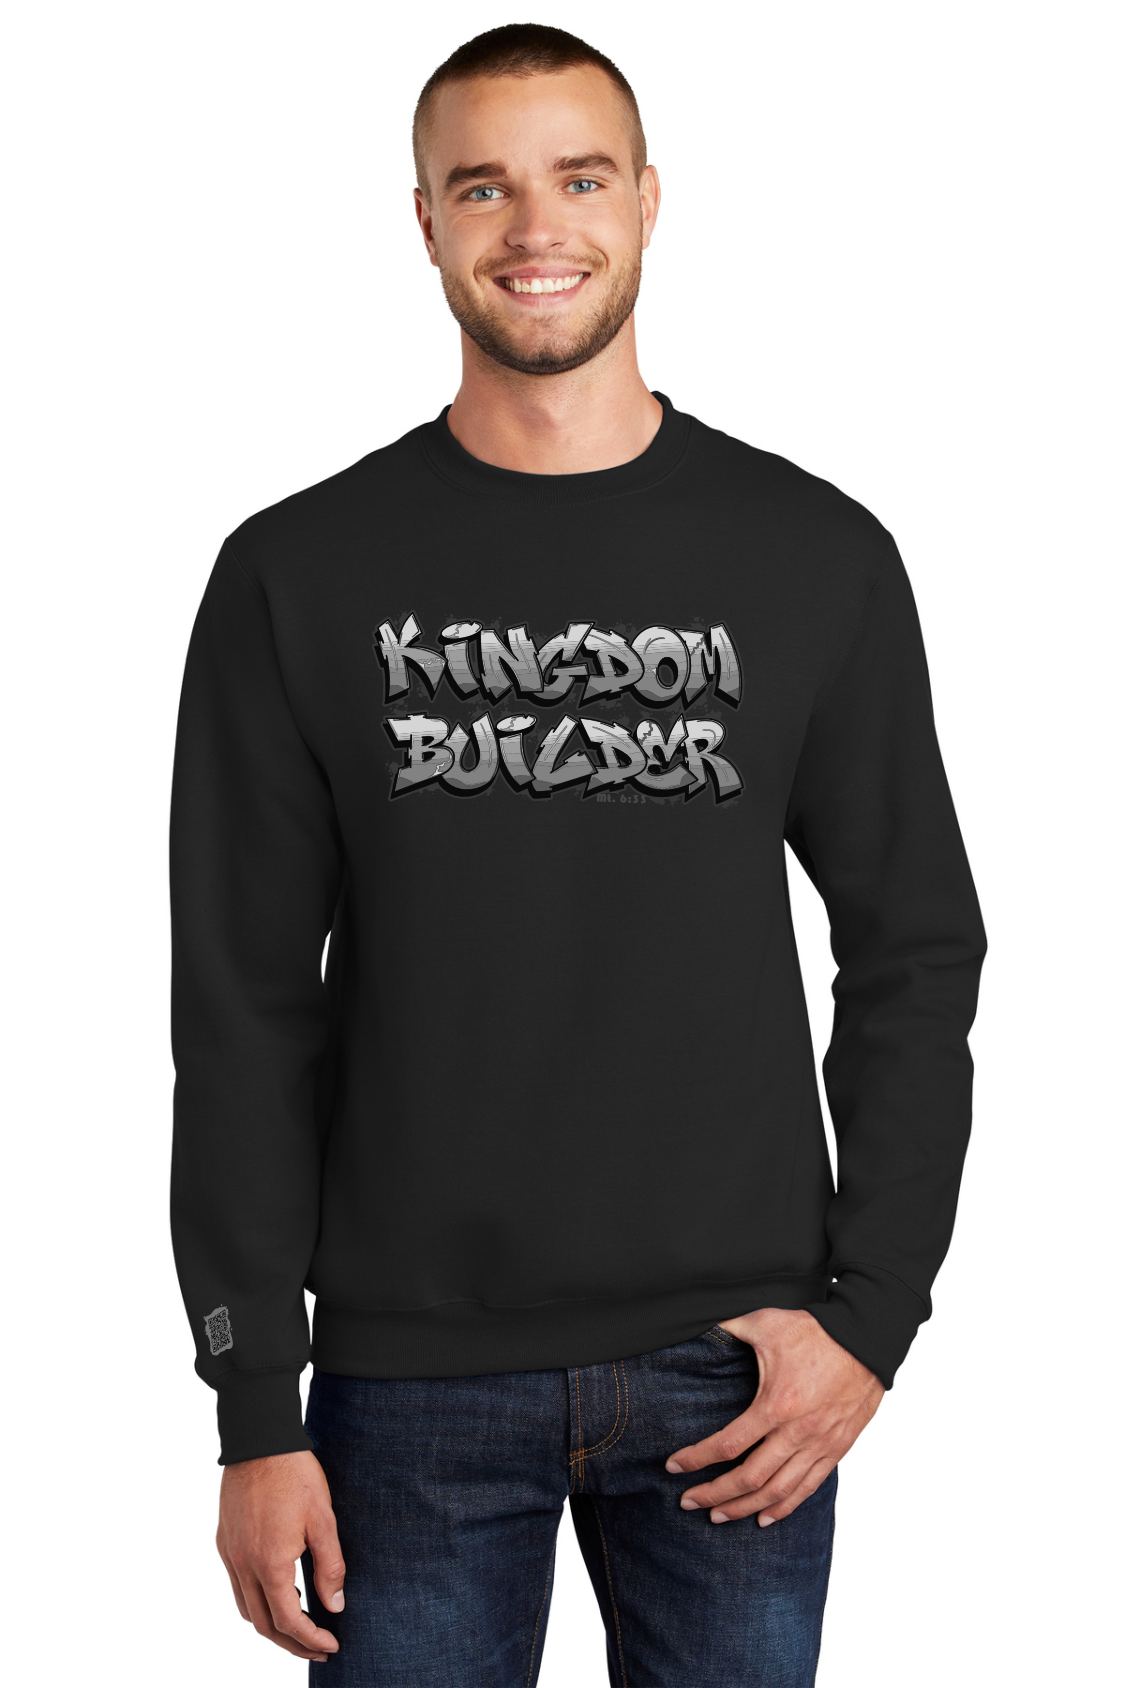 Kingdom Builder - Black Sweatshirt - Black / White Graphics